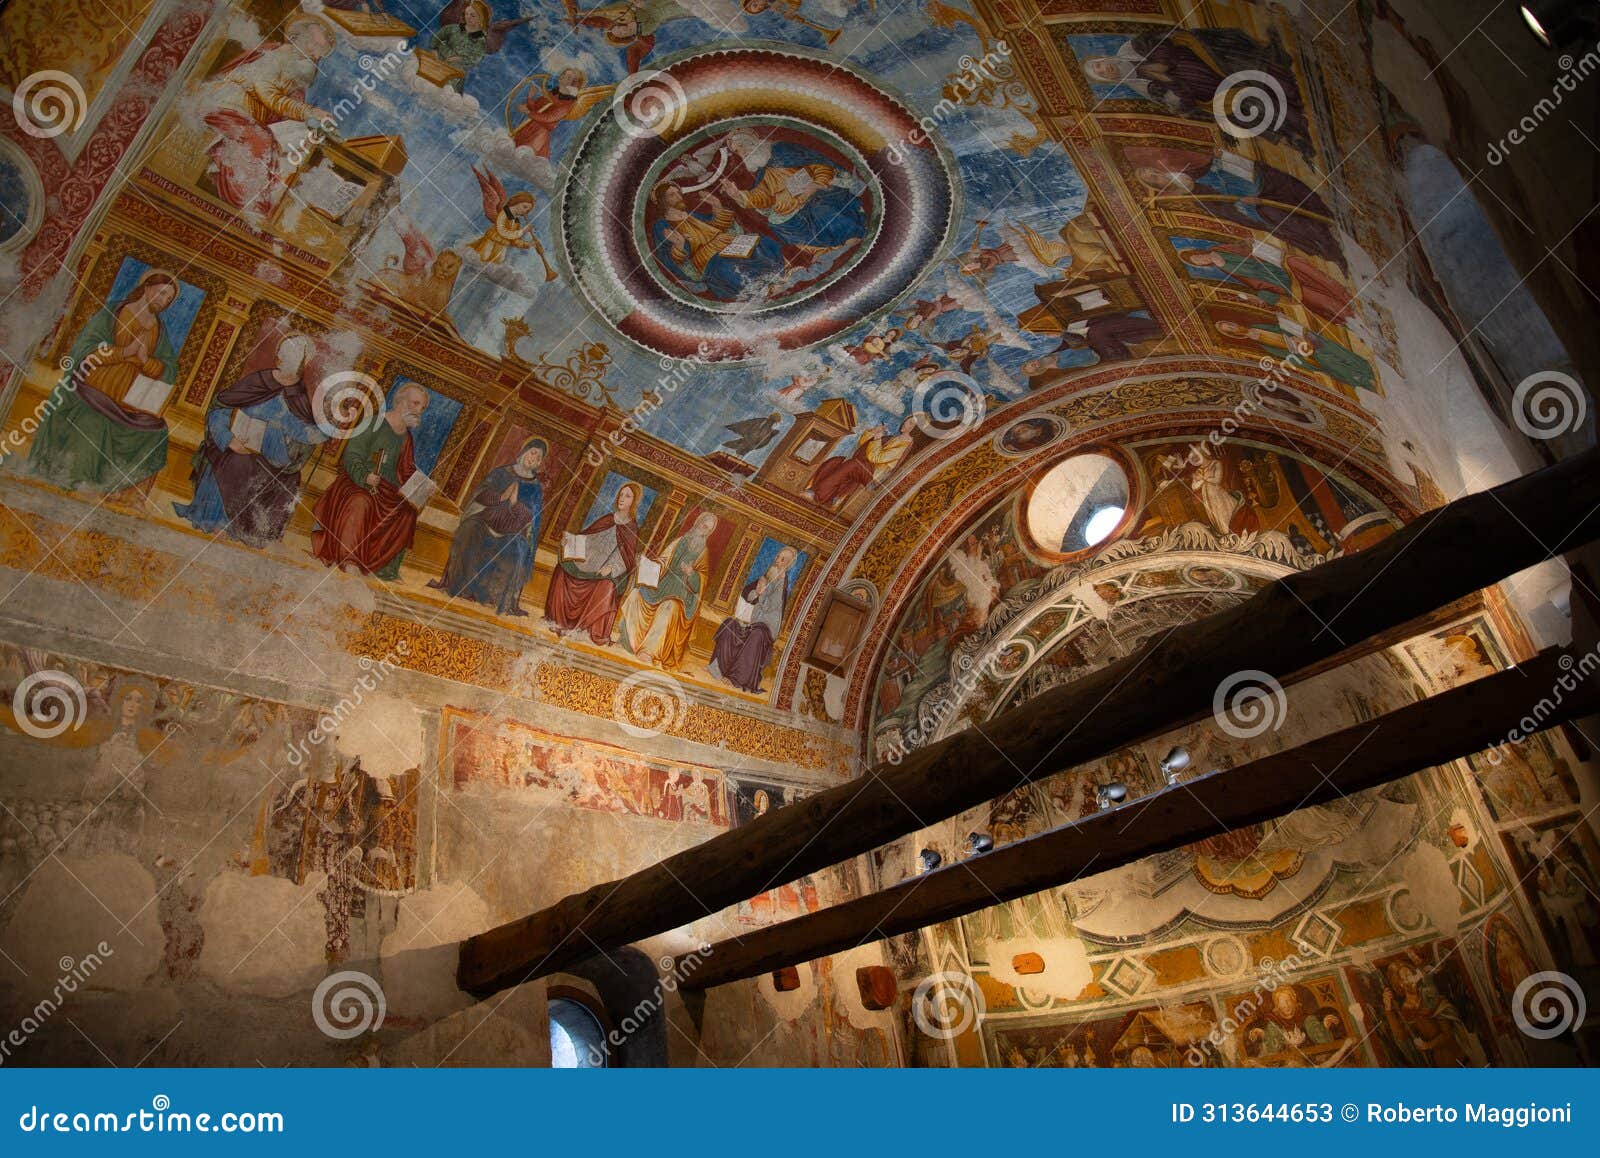 christian colorful frescoes, santo spirito - holy spirit - church. bormio, lombardy, italy